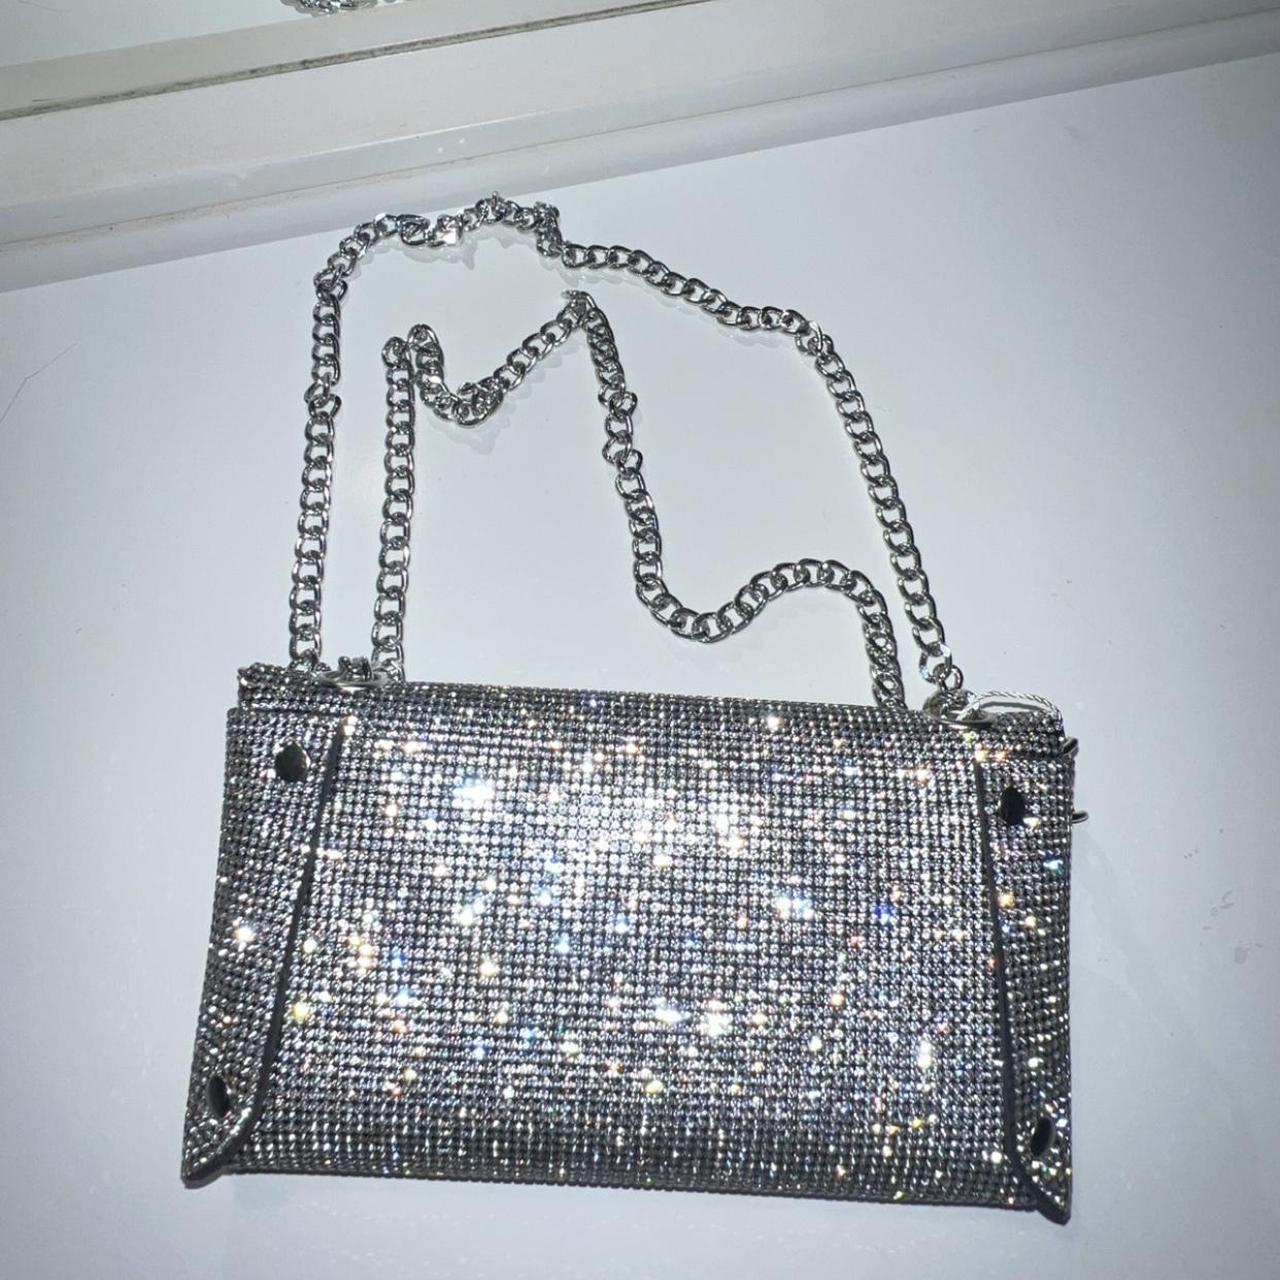 Brand new diamanté embellished small clutch bag -... - Depop